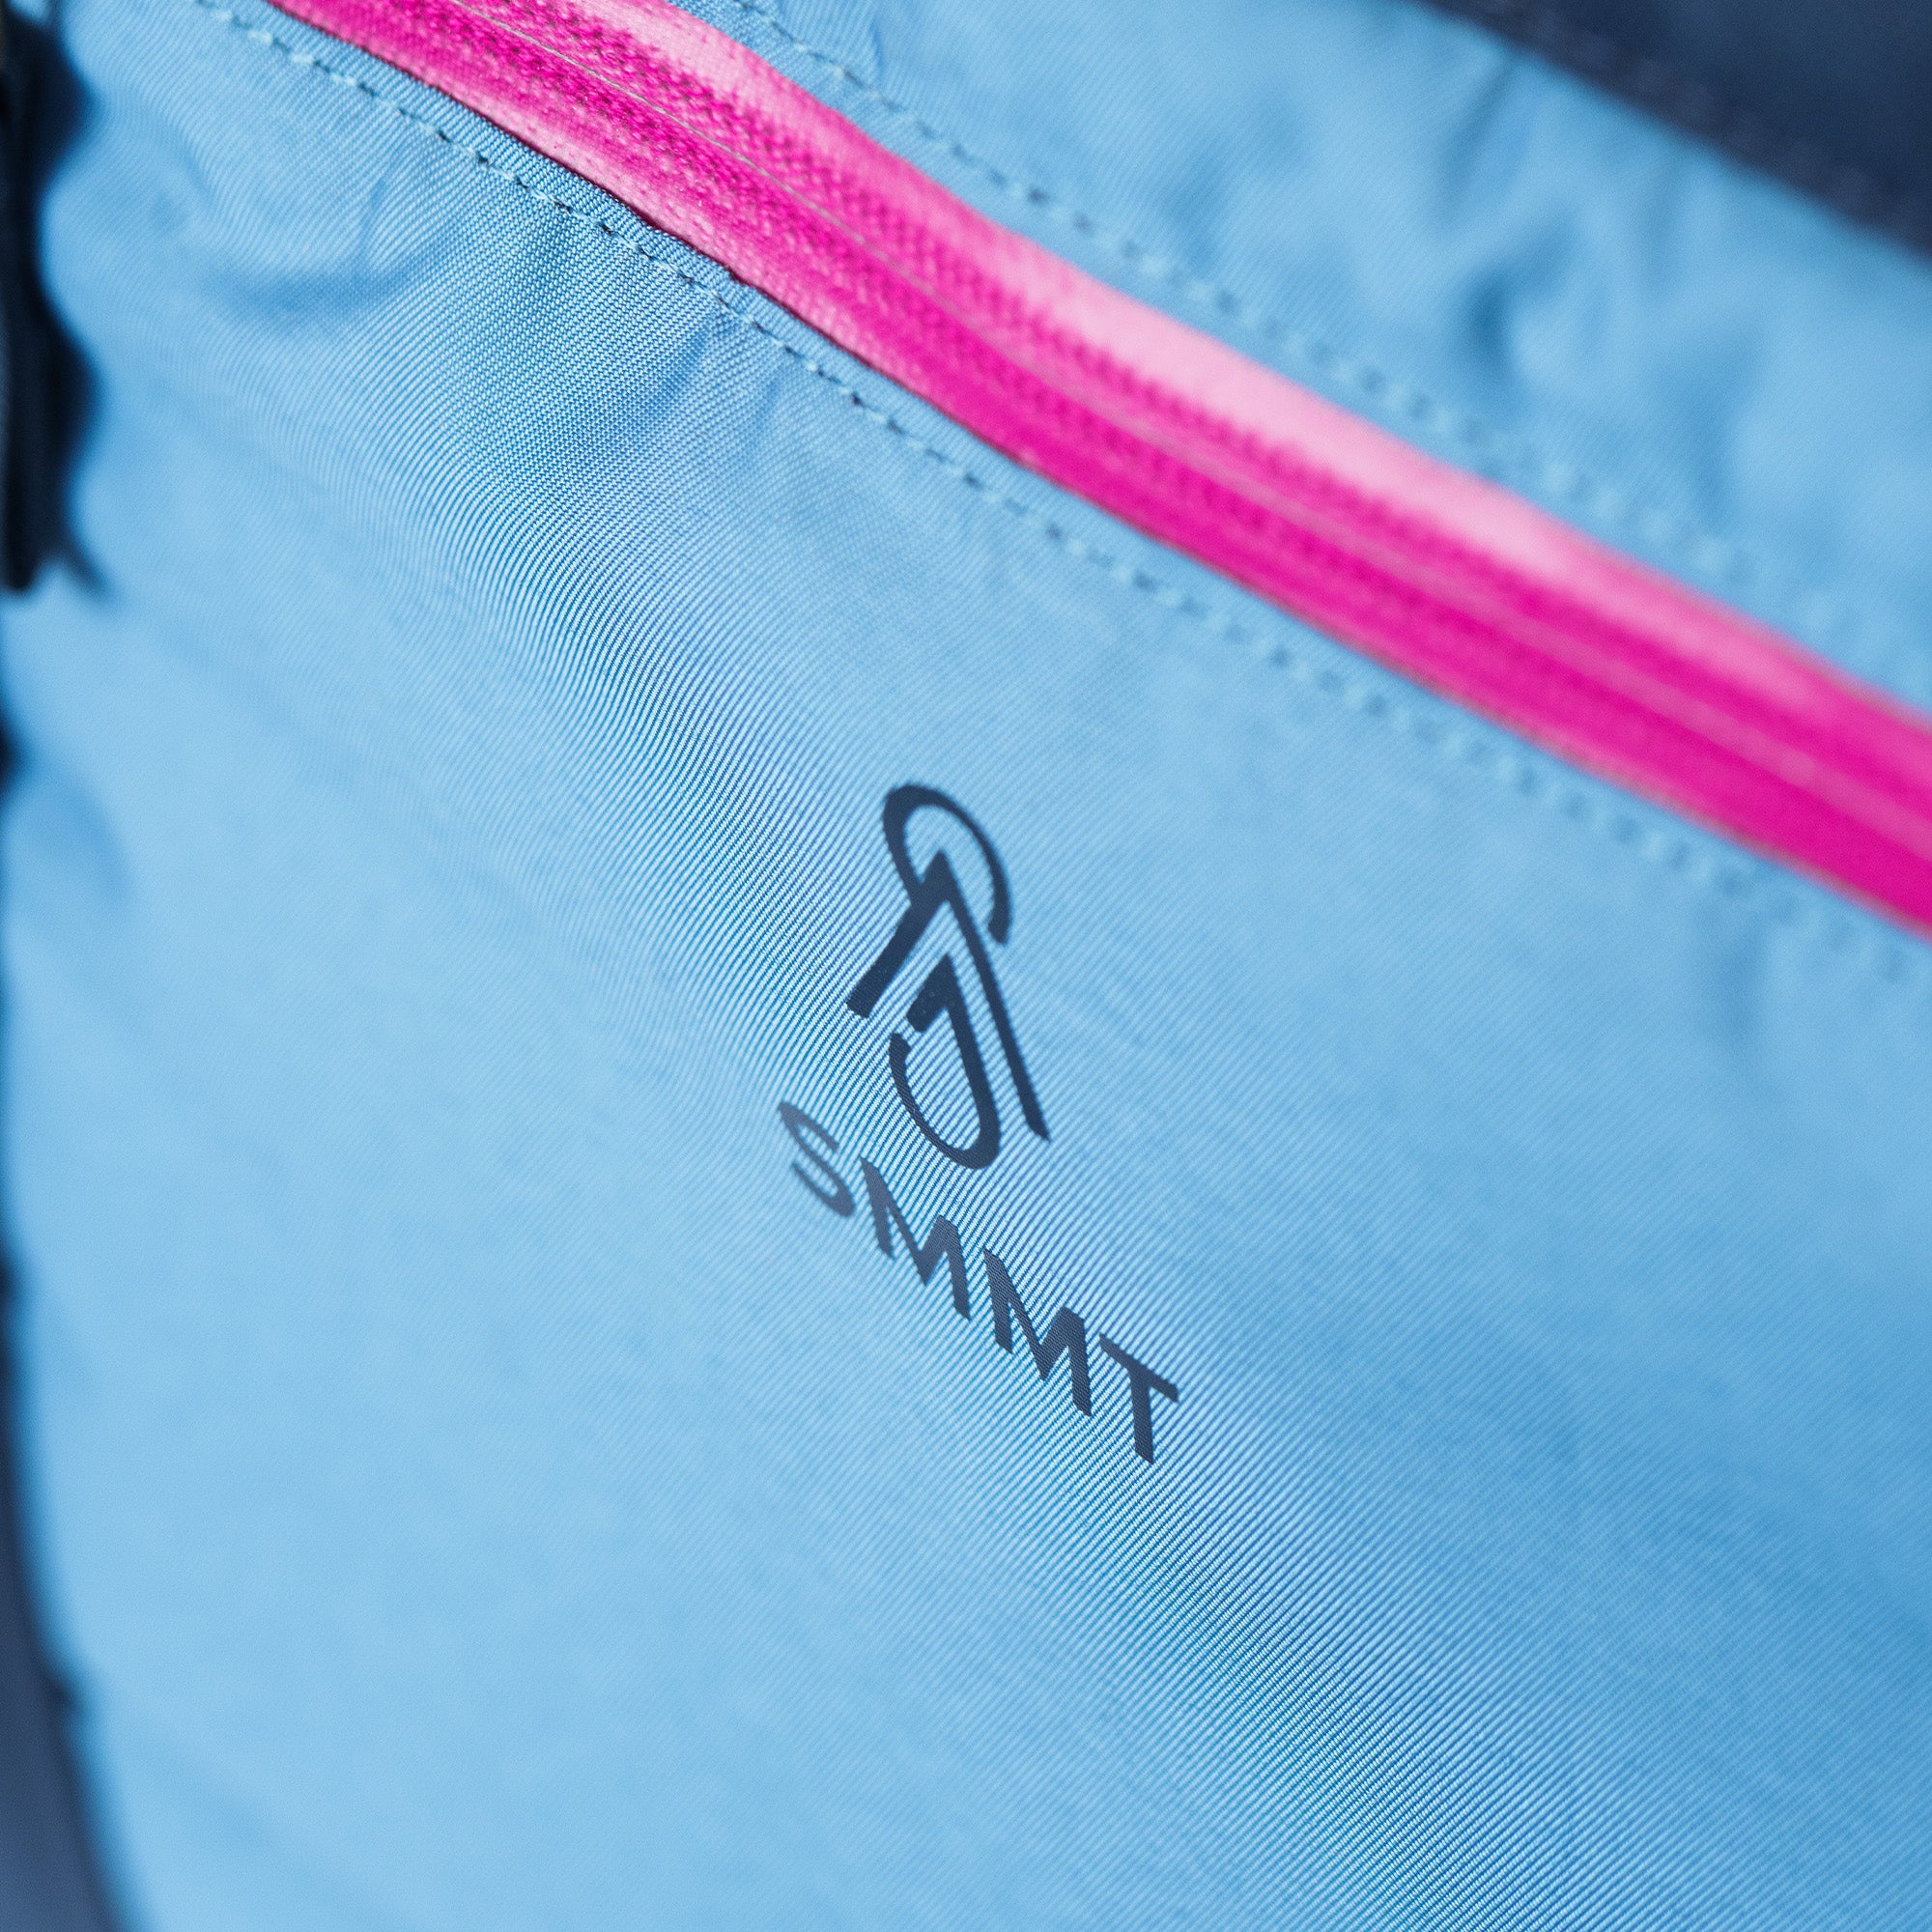 SMMT logo printed below the pink zipper on the 35 liter powderloft bag